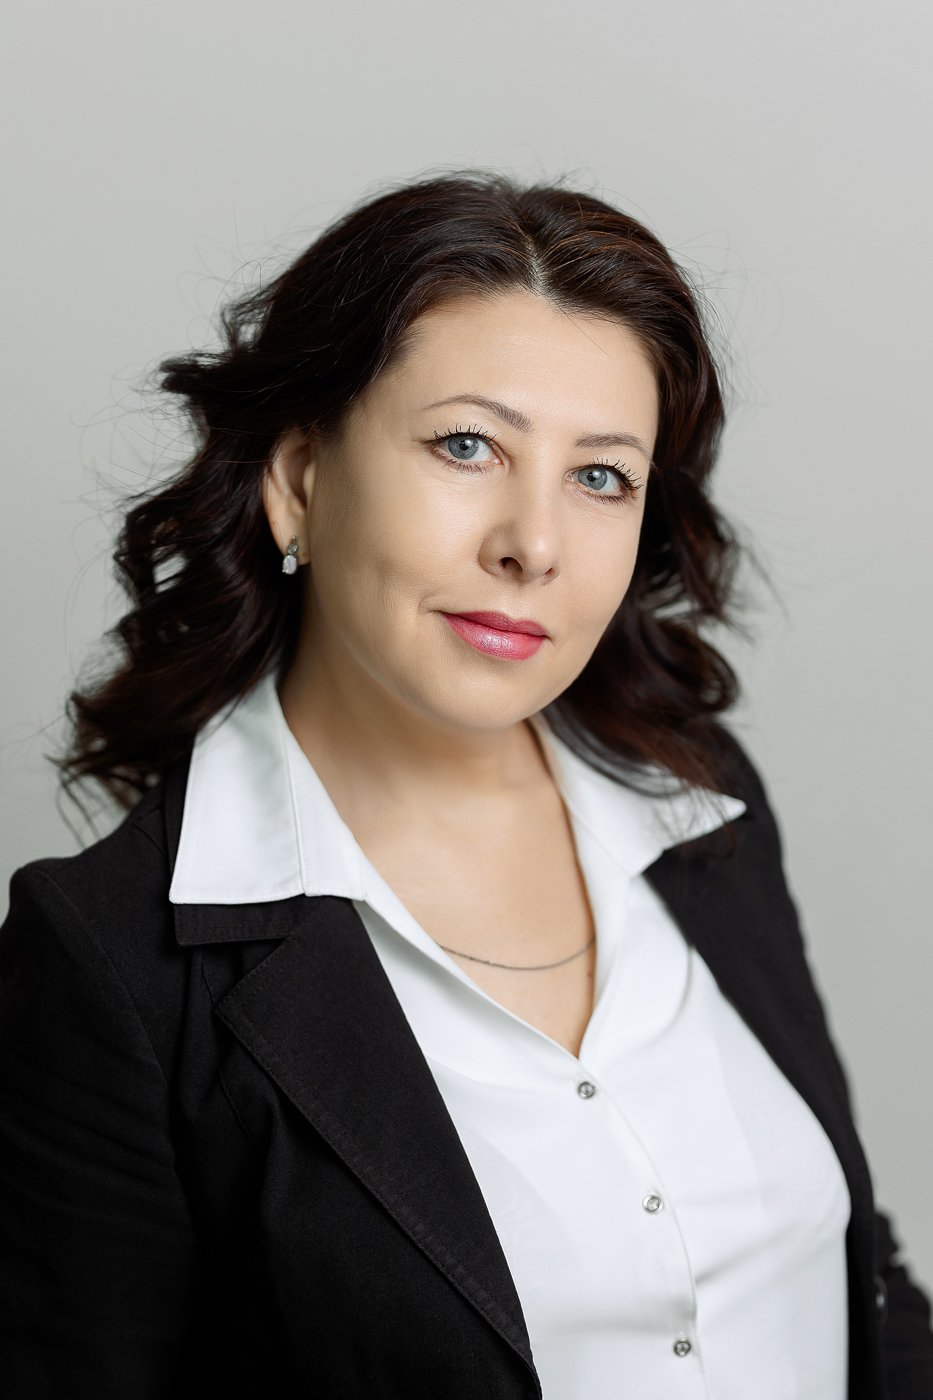 АЛЕКСЕЕВА Татьяна Александровна (18 октября 1973 года).